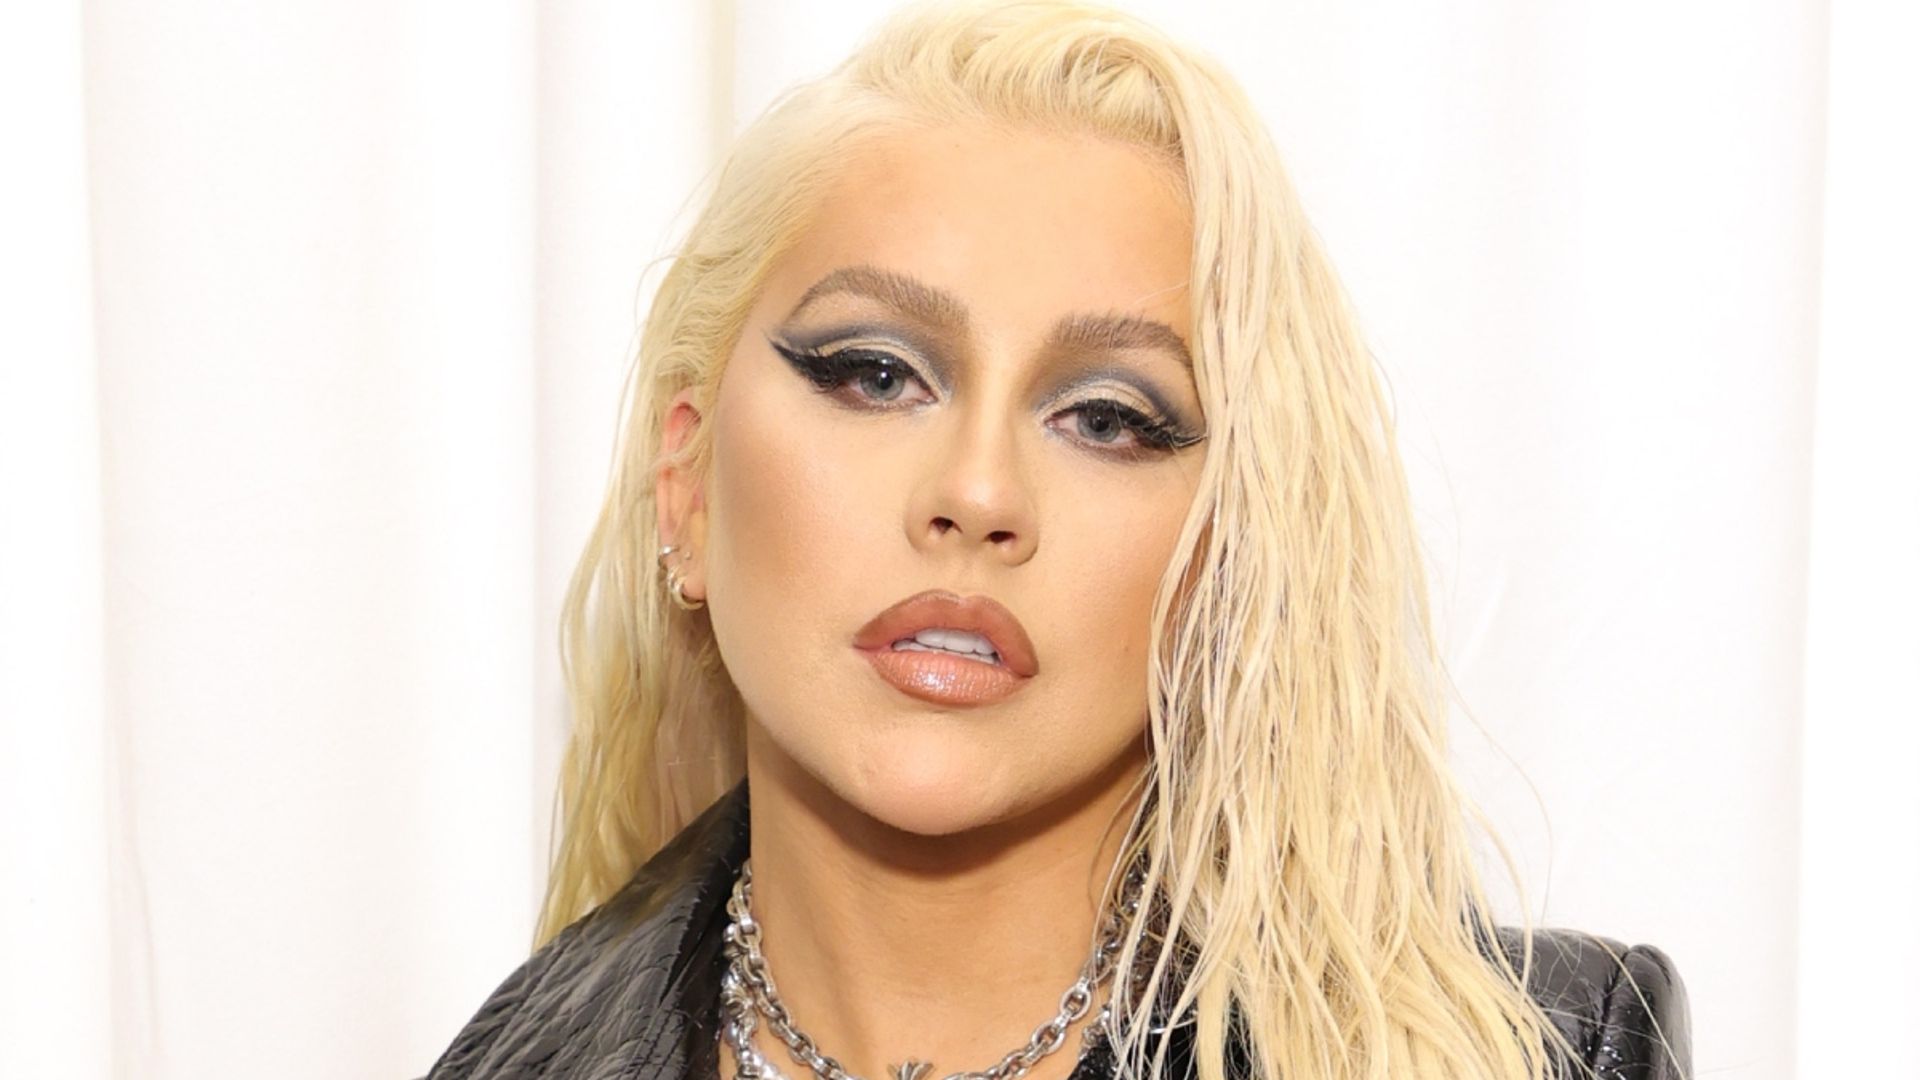 Christina Aguilera shares devastating news with fans - details | HELLO!